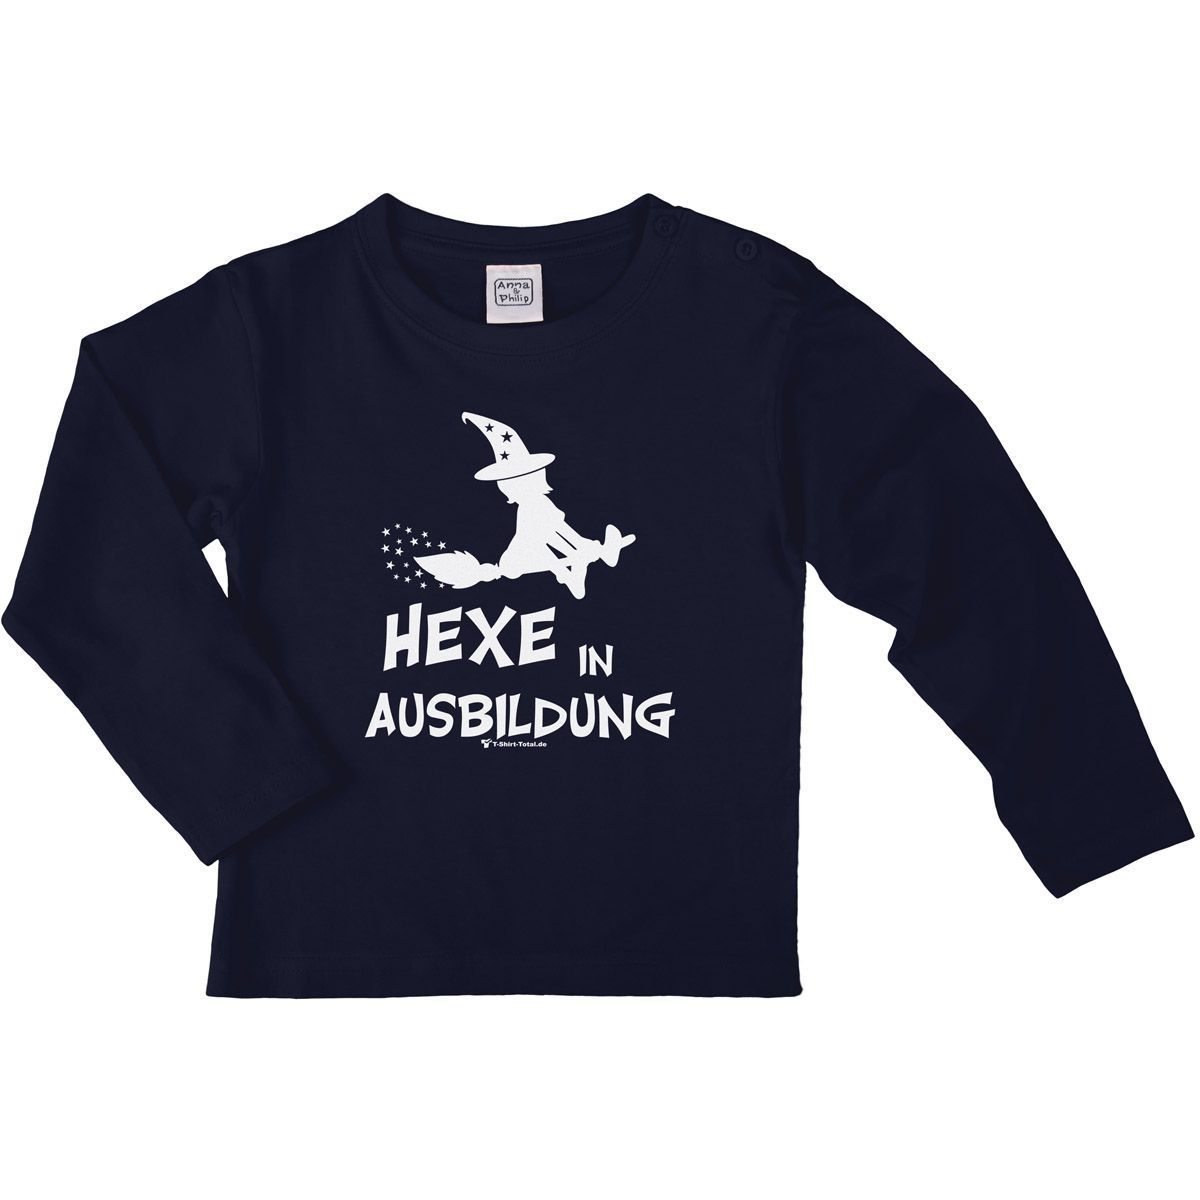 Hexe in Ausbildung Kinder Langarm Shirt navy 110 / 116